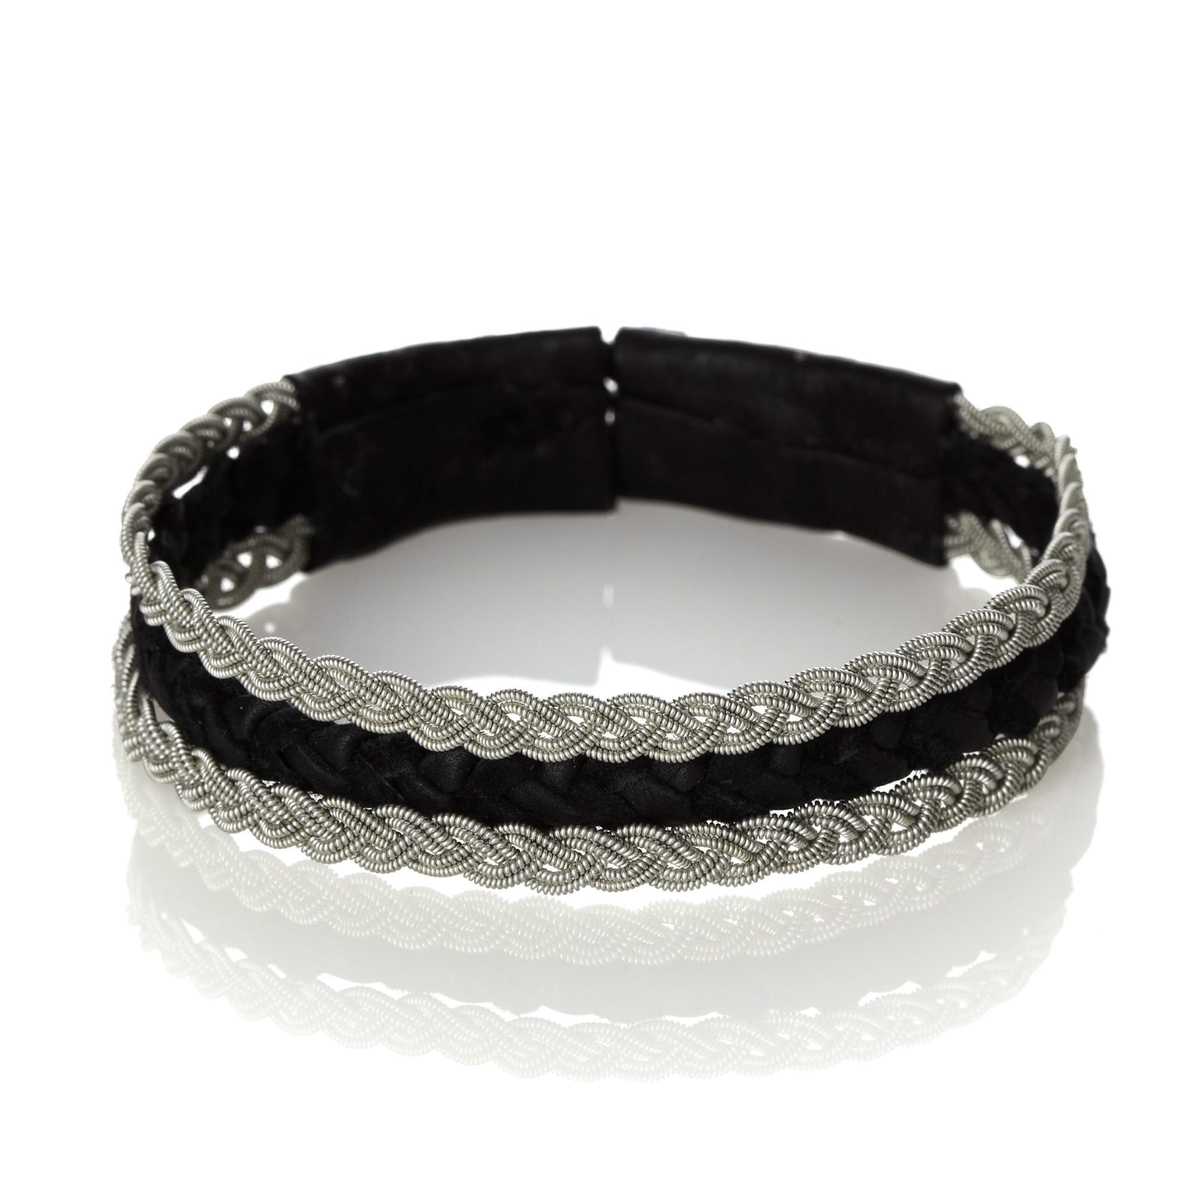 Tin thread bracelet